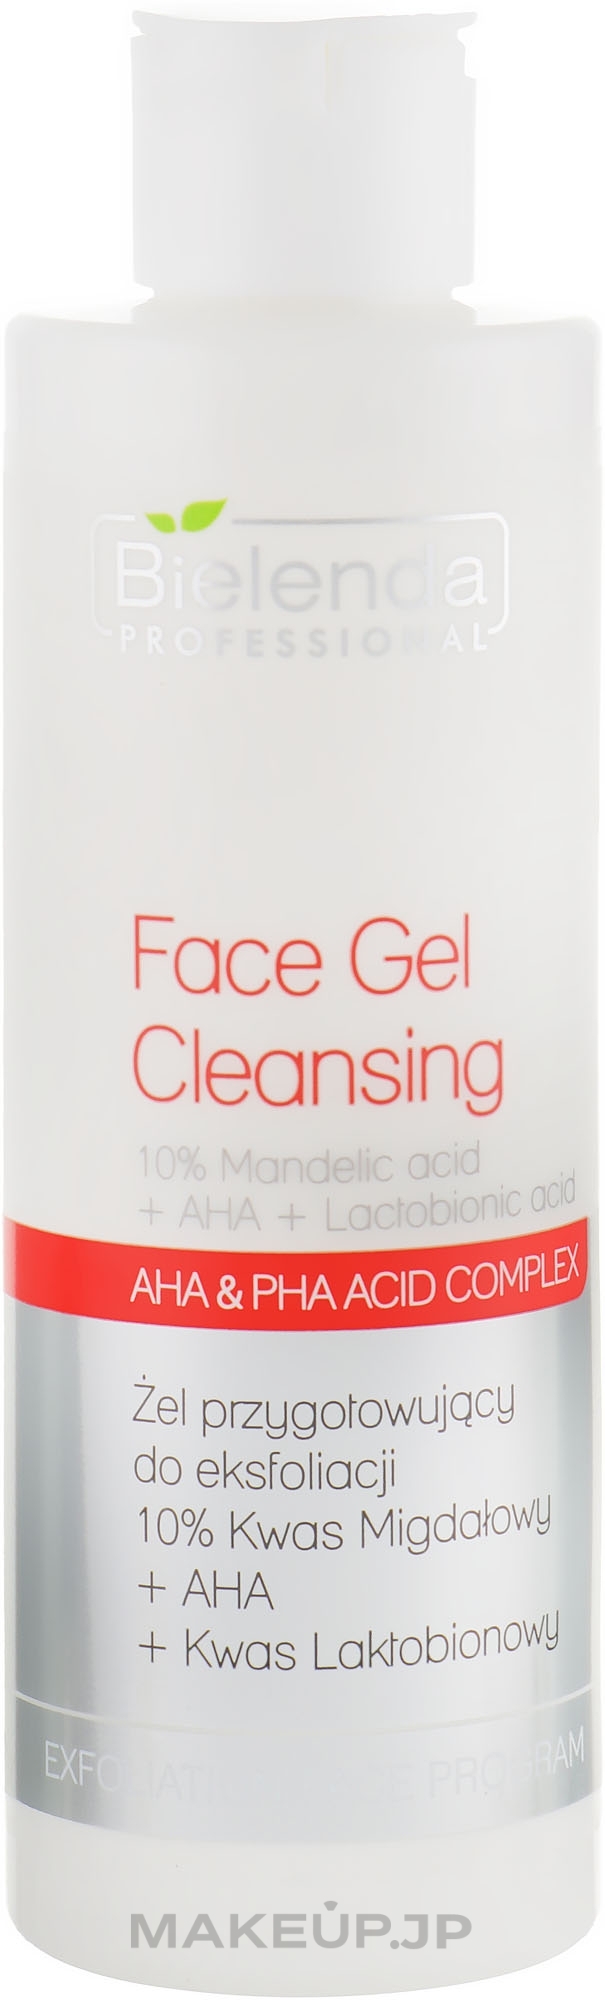 Exfoliating Gel 10% with Almind Acid + AHA + Lactobionic Acid - Bielenda Professional Exfoliation Face Program Cleansing Face Gel — photo 200 g